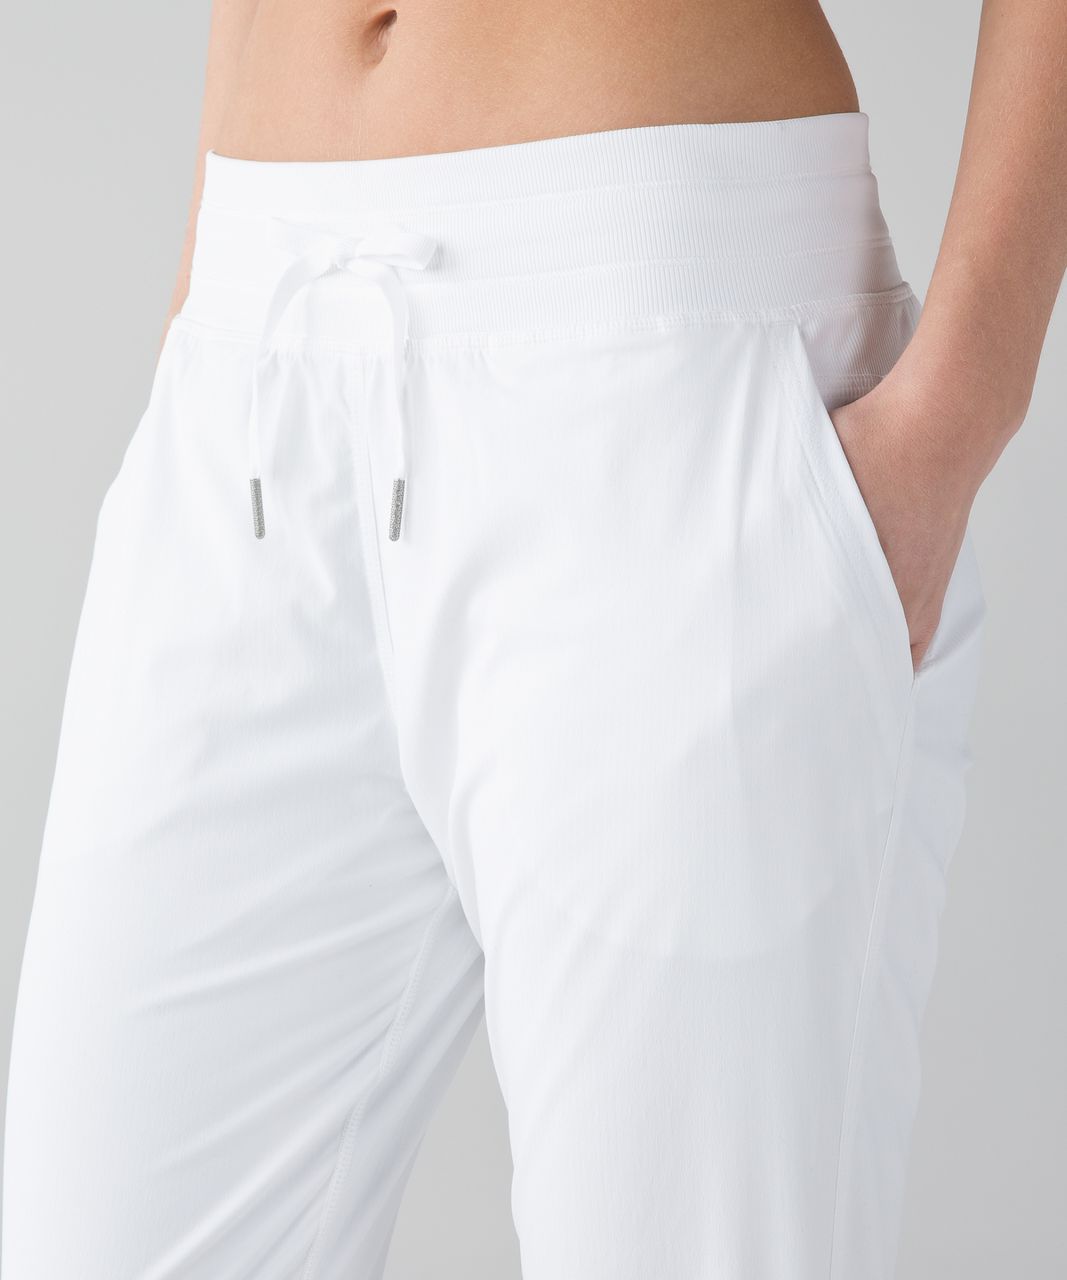 lululemon white pants